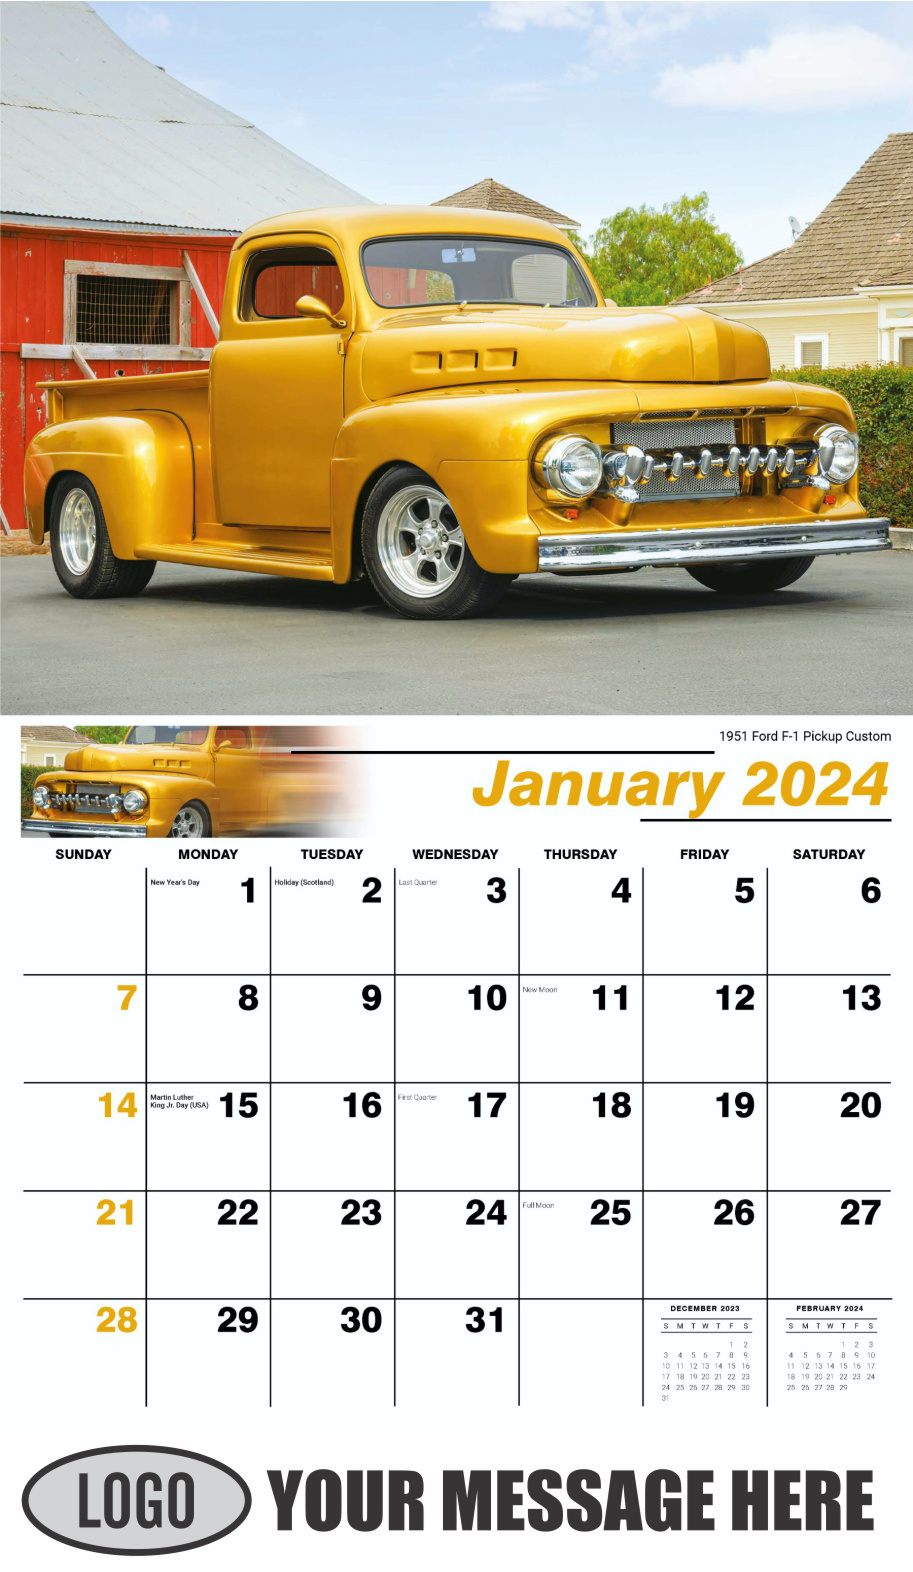 Pumped-Up Pickups 2024 Automotive Business Promo Calendar - January